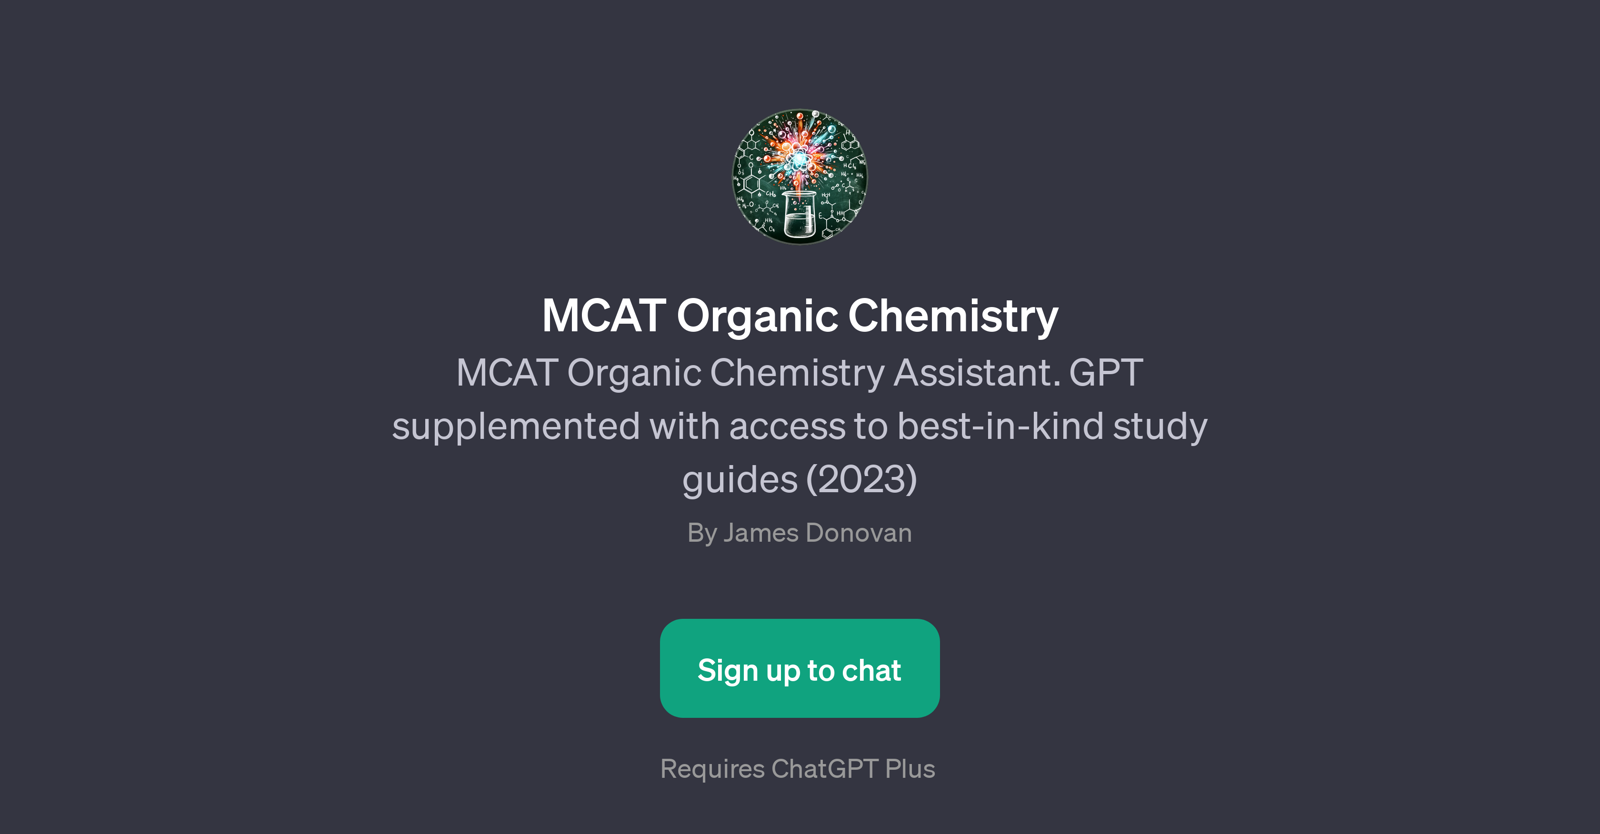 MCAT Organic Chemistry website